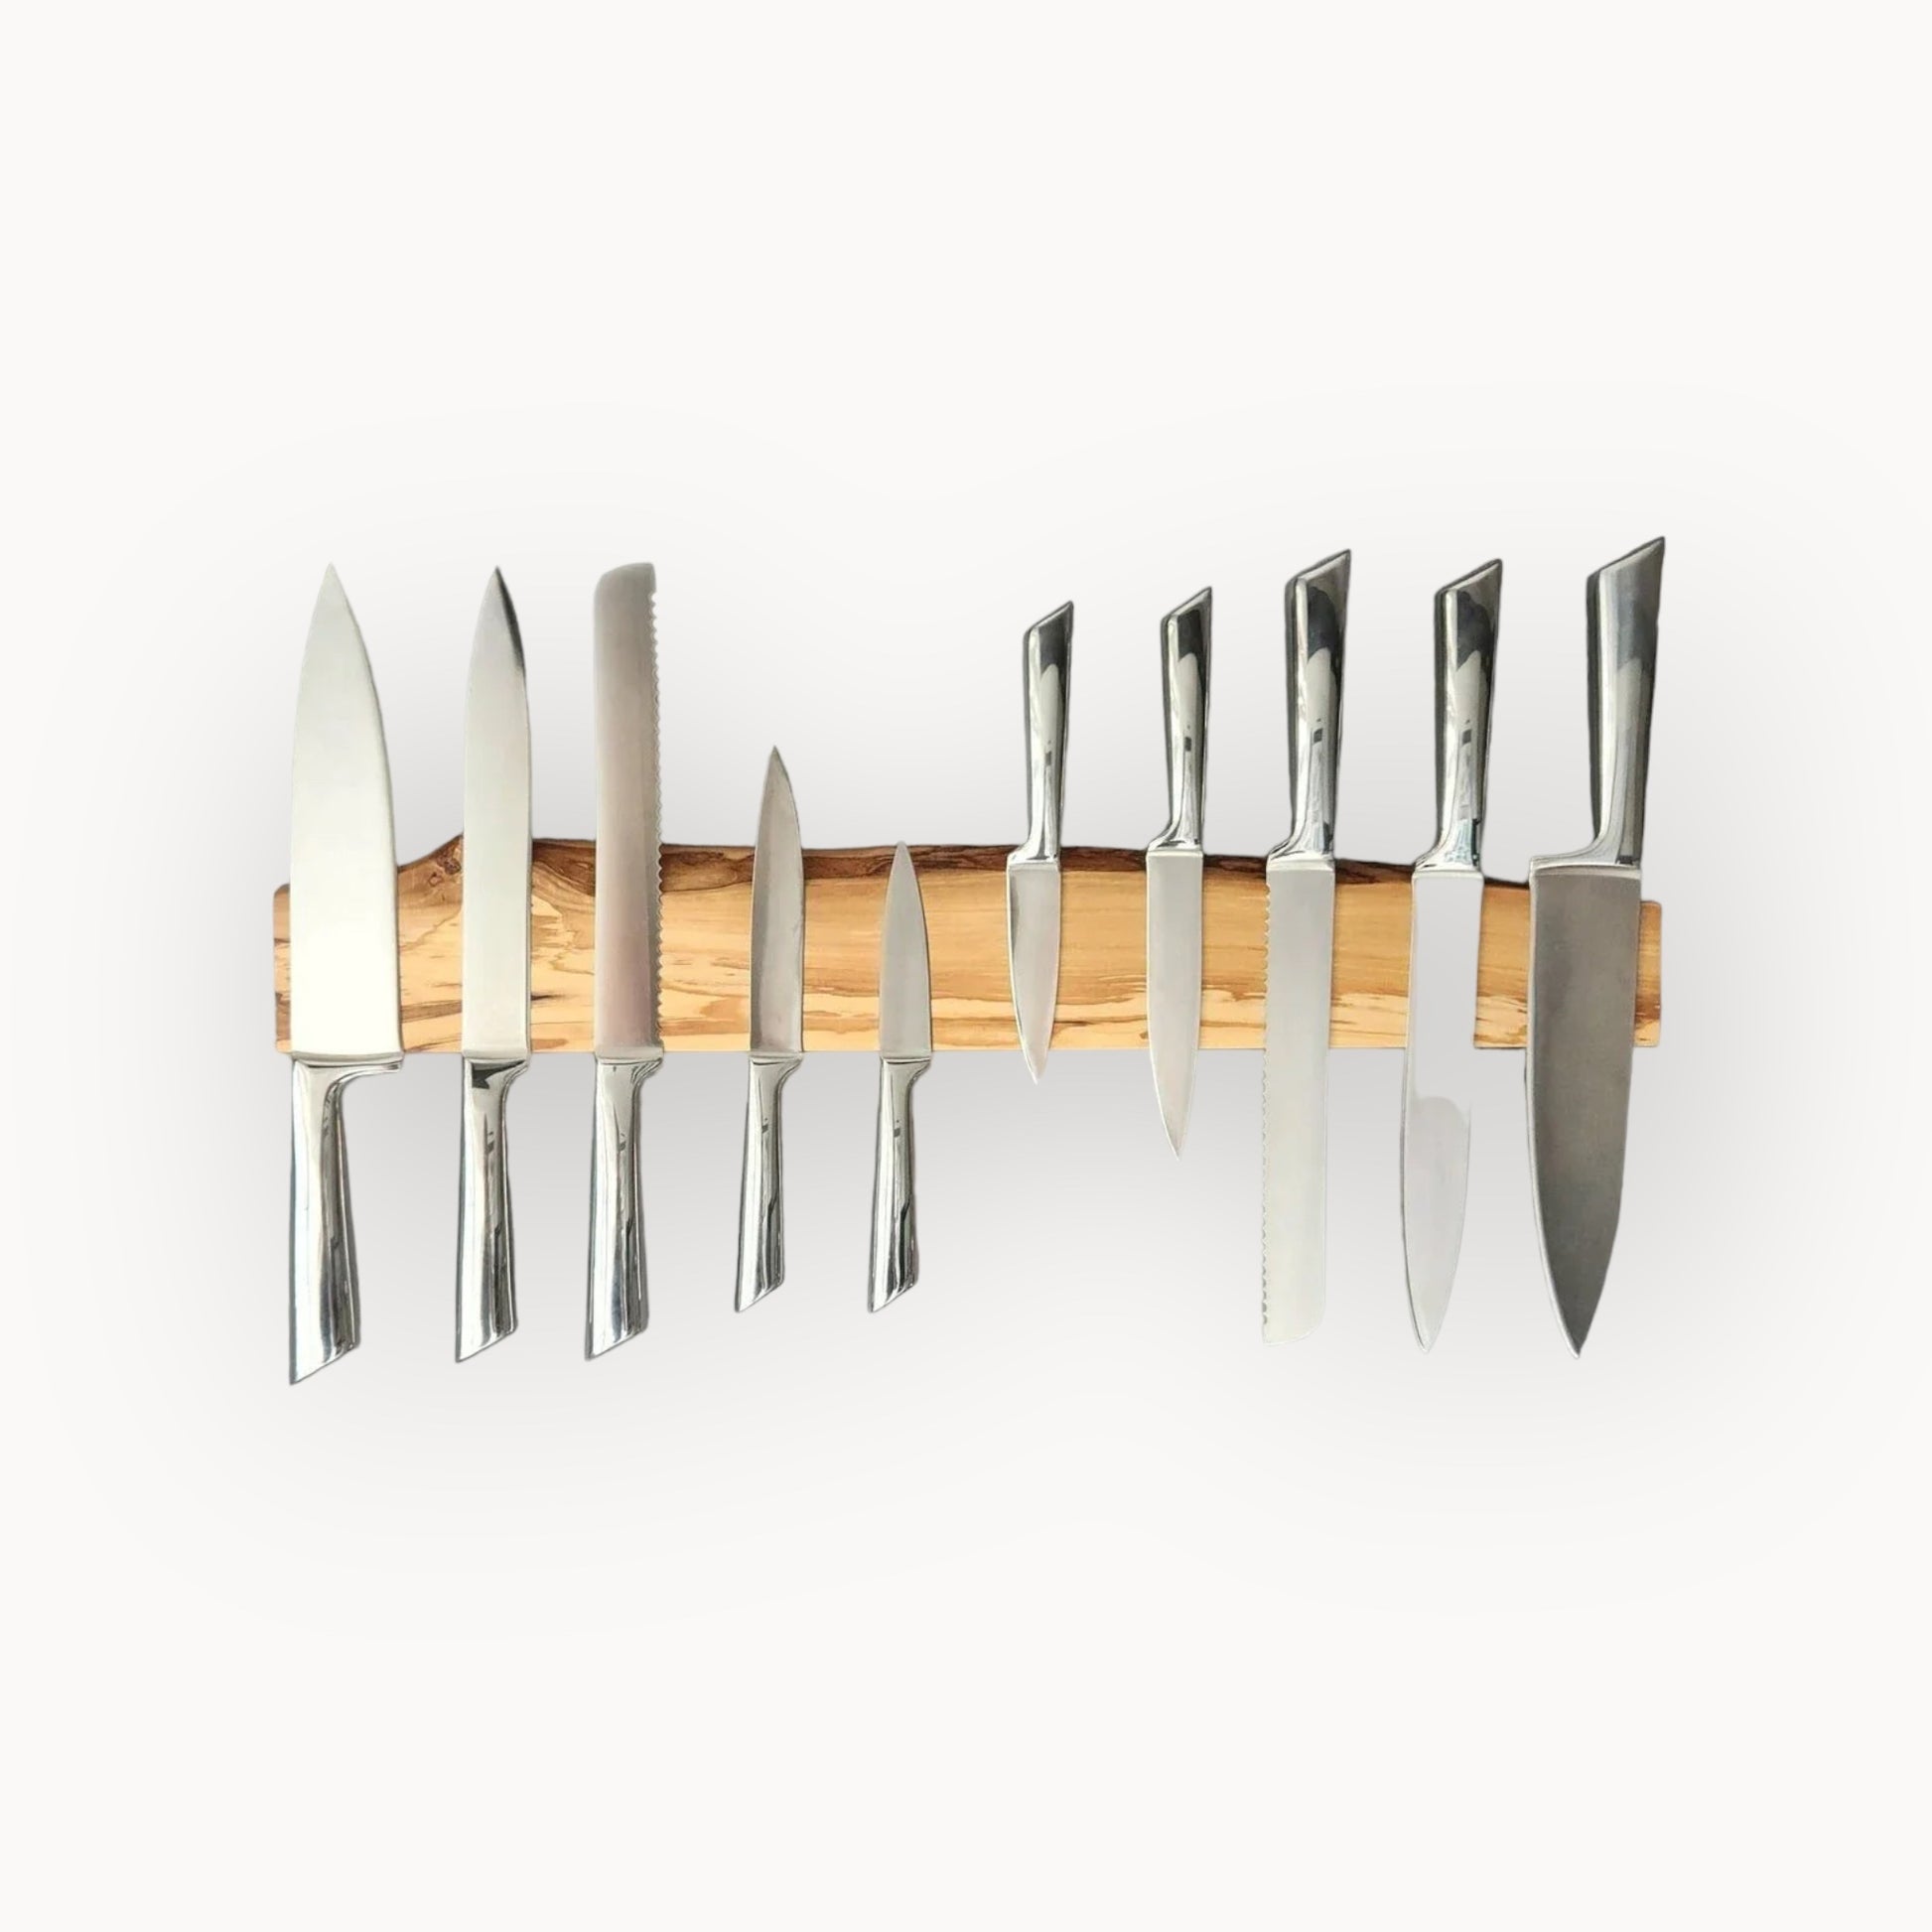 Magnetic Knife Holder Rack Kitchen Magnet Strip Organizer Wall Adhesive  Mount